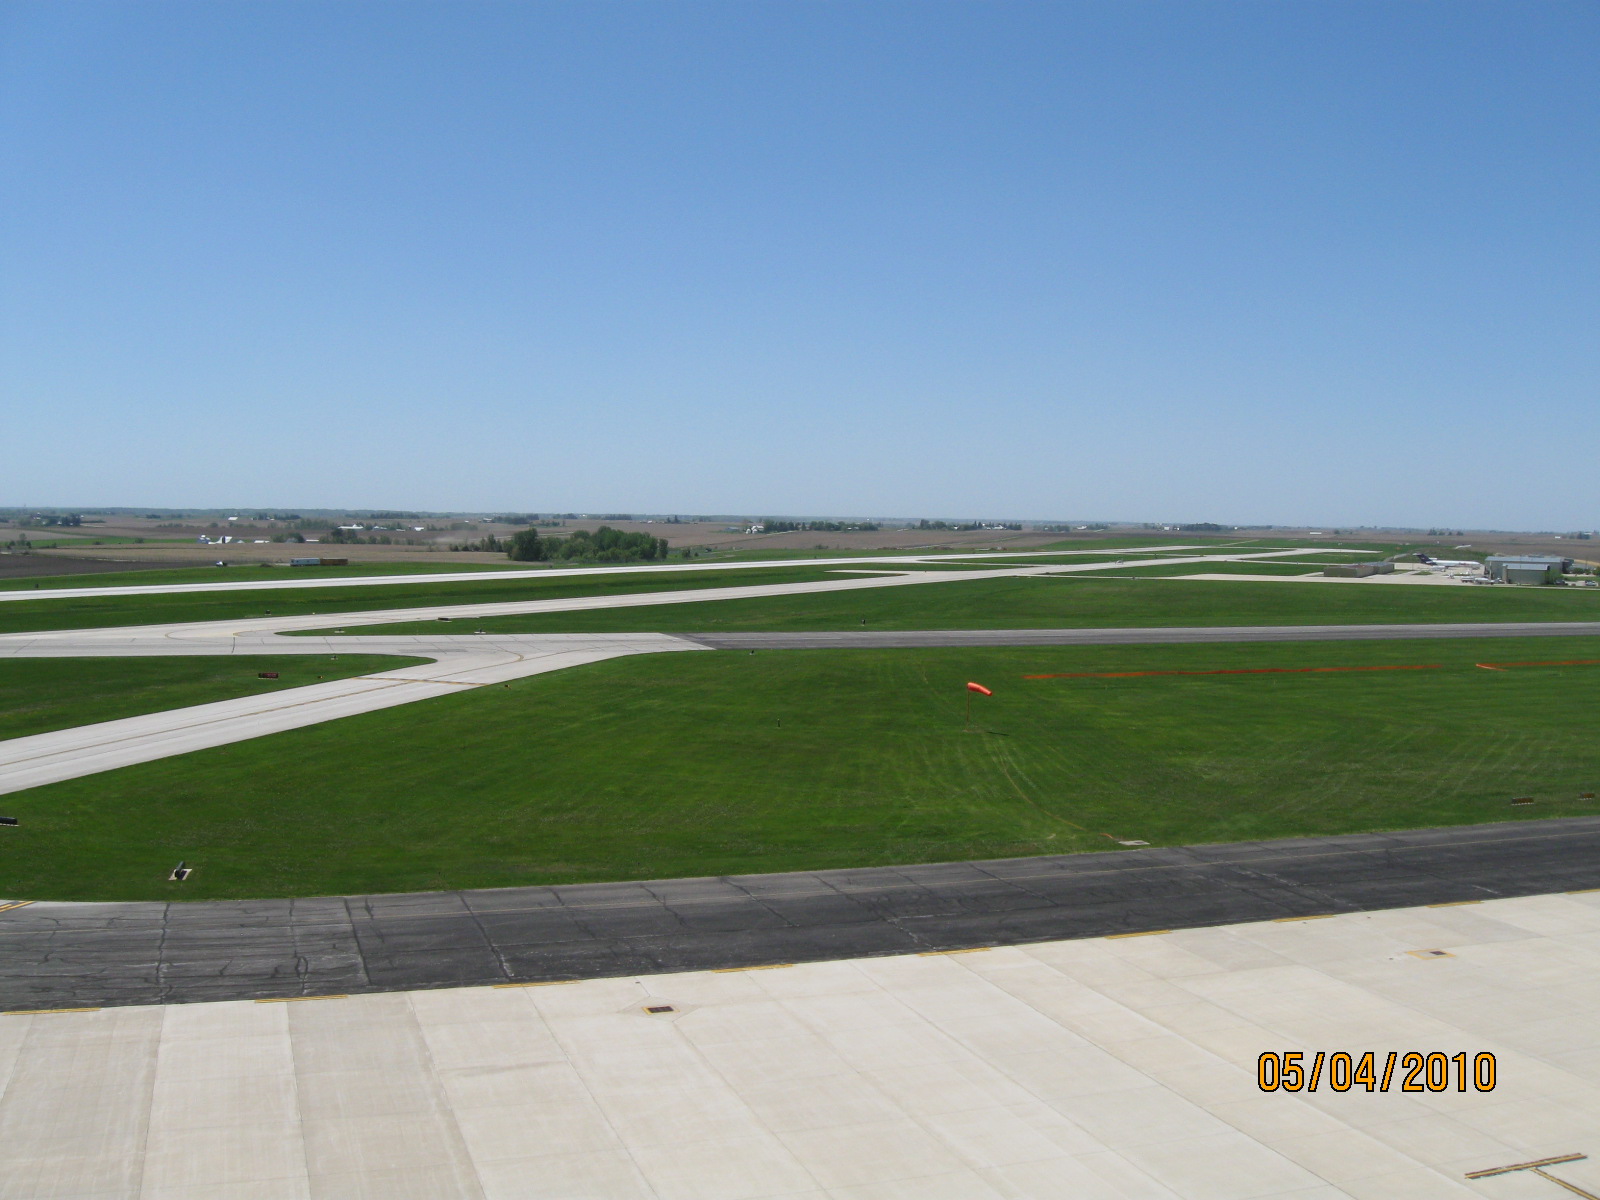 Runway 9/27 at the Eastern Iowa Airport